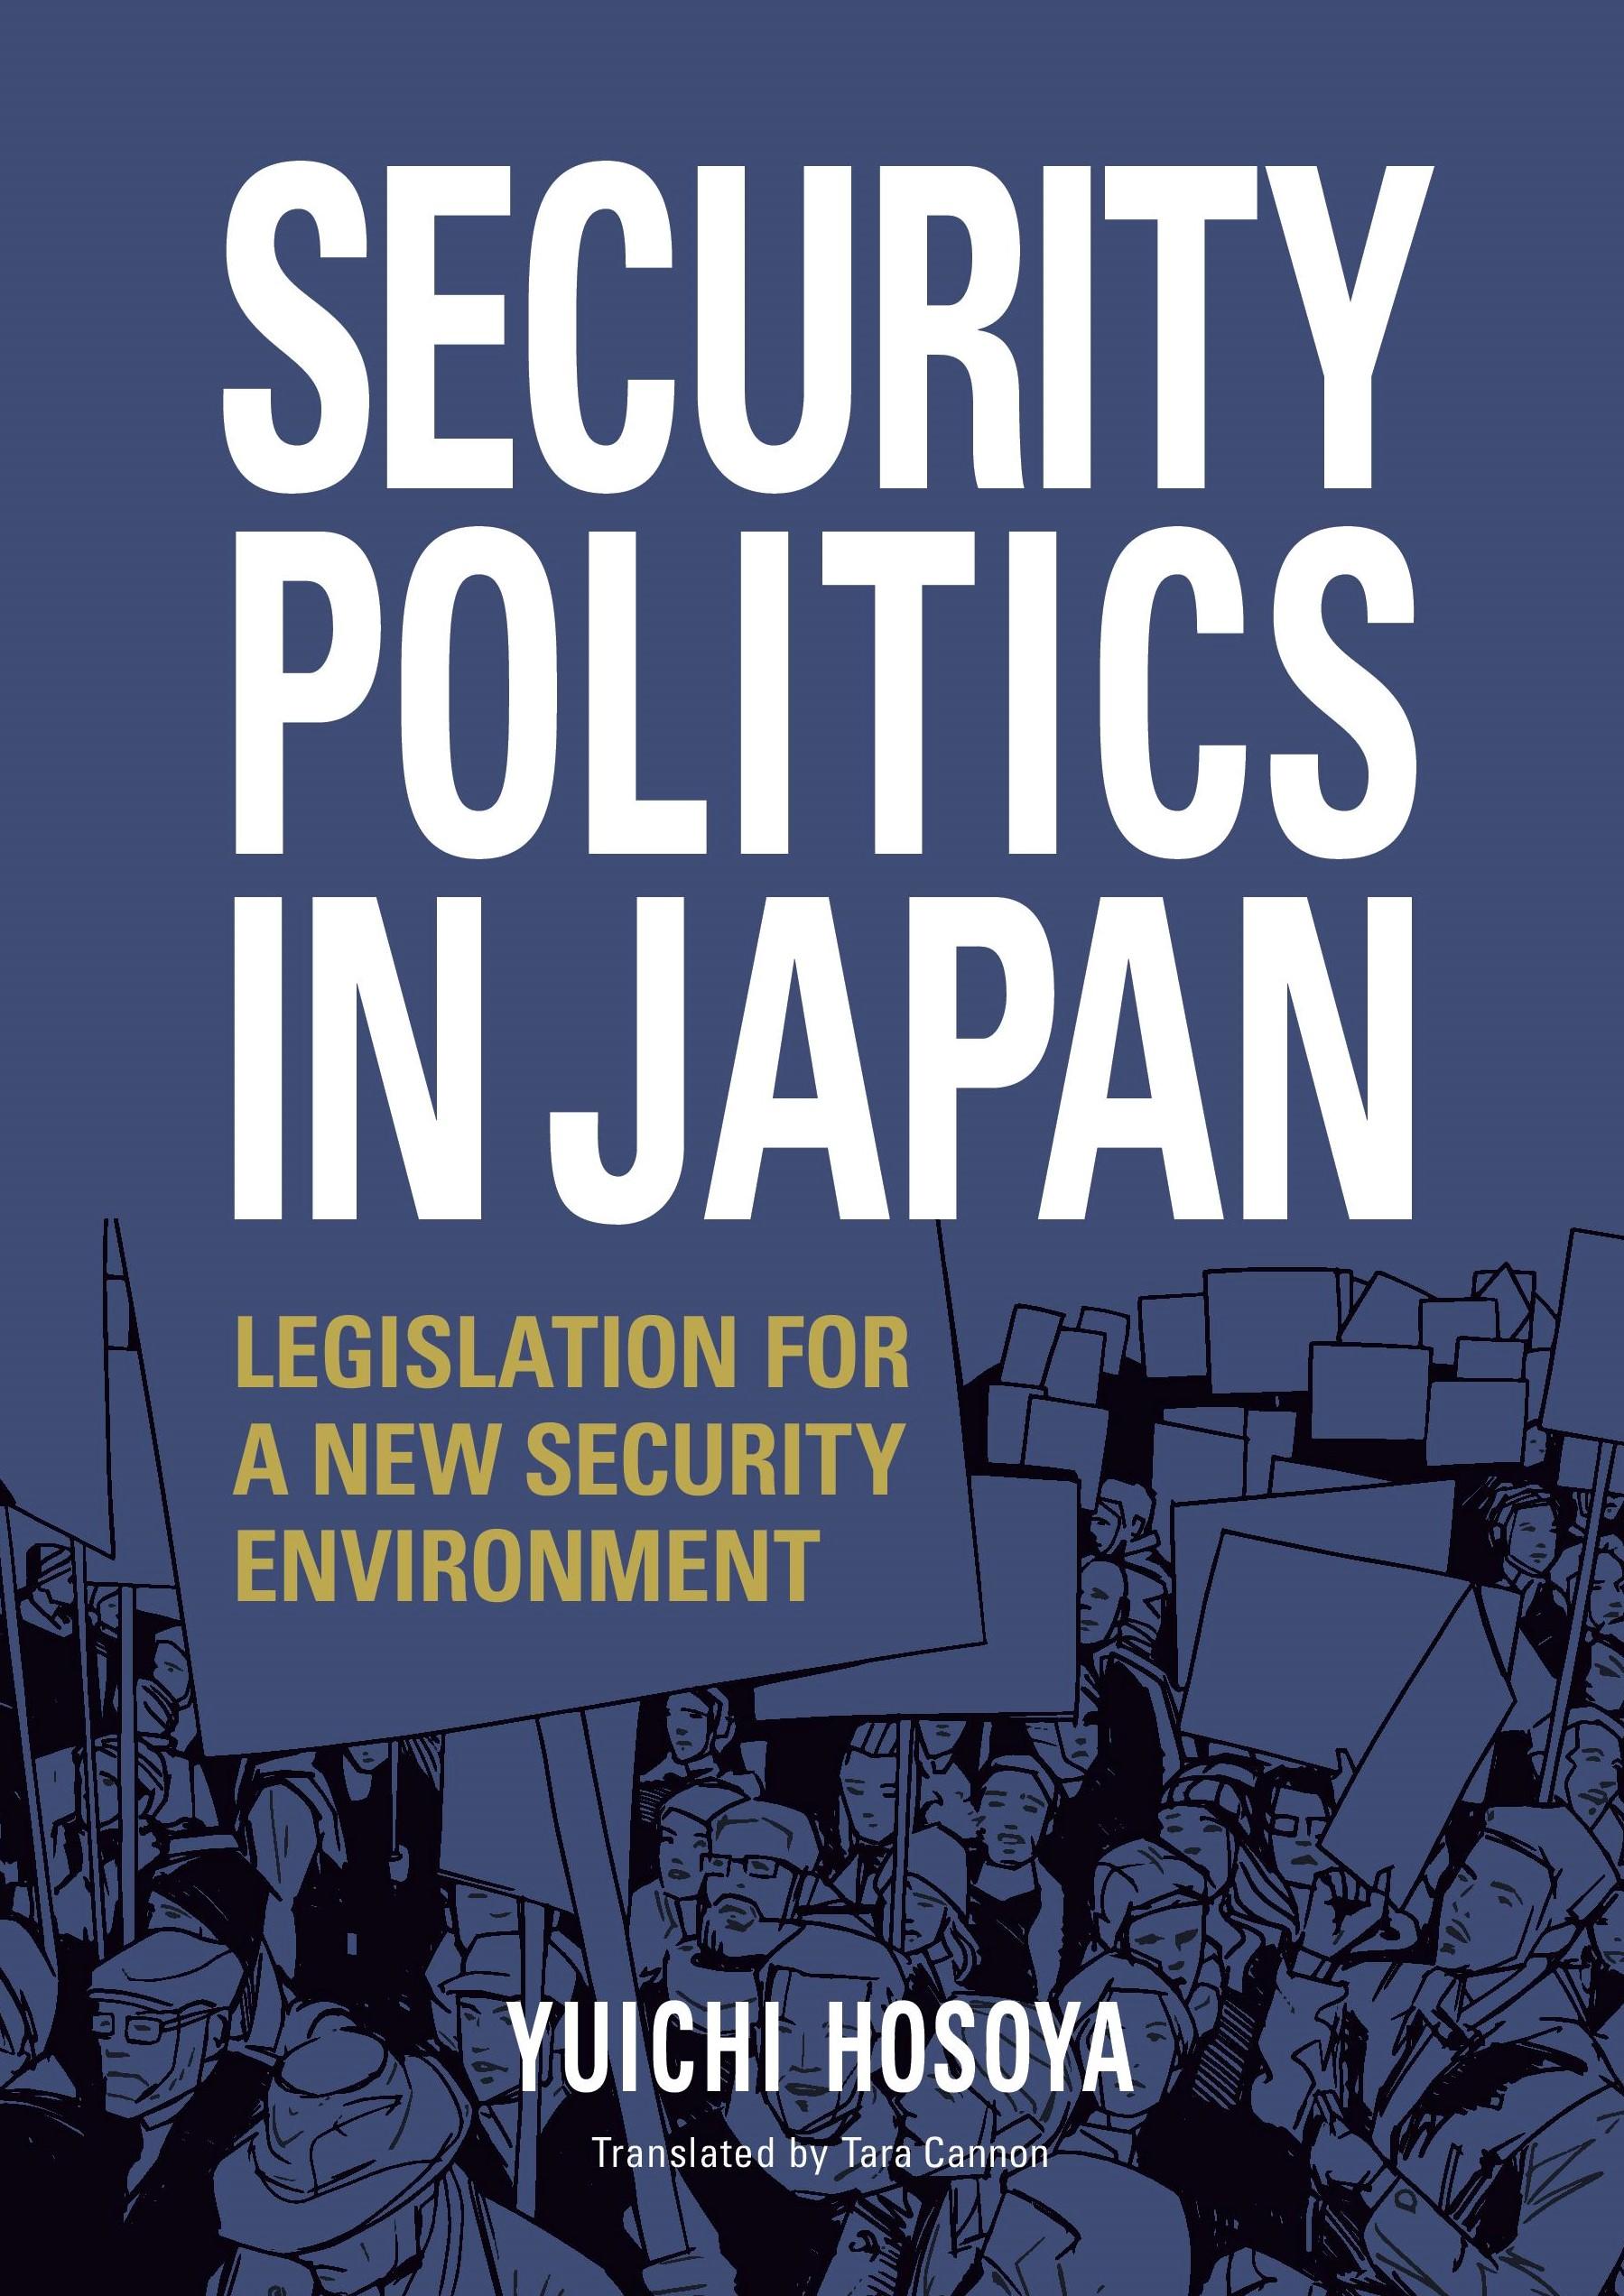 Security Politics in Japan